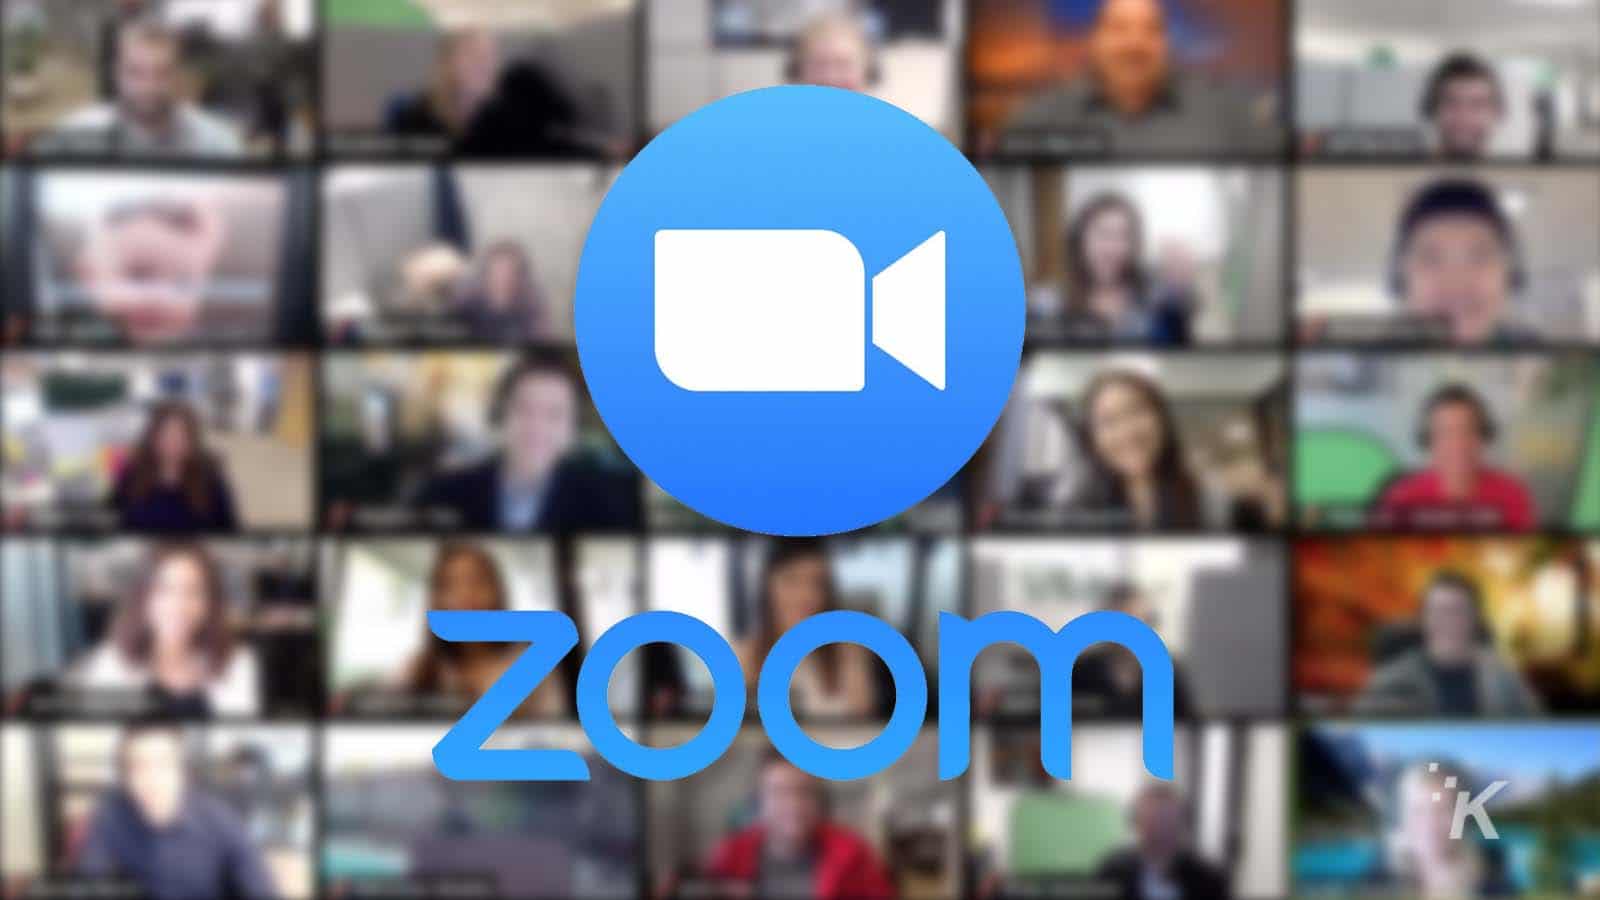 zoom app windows 7 32 bit